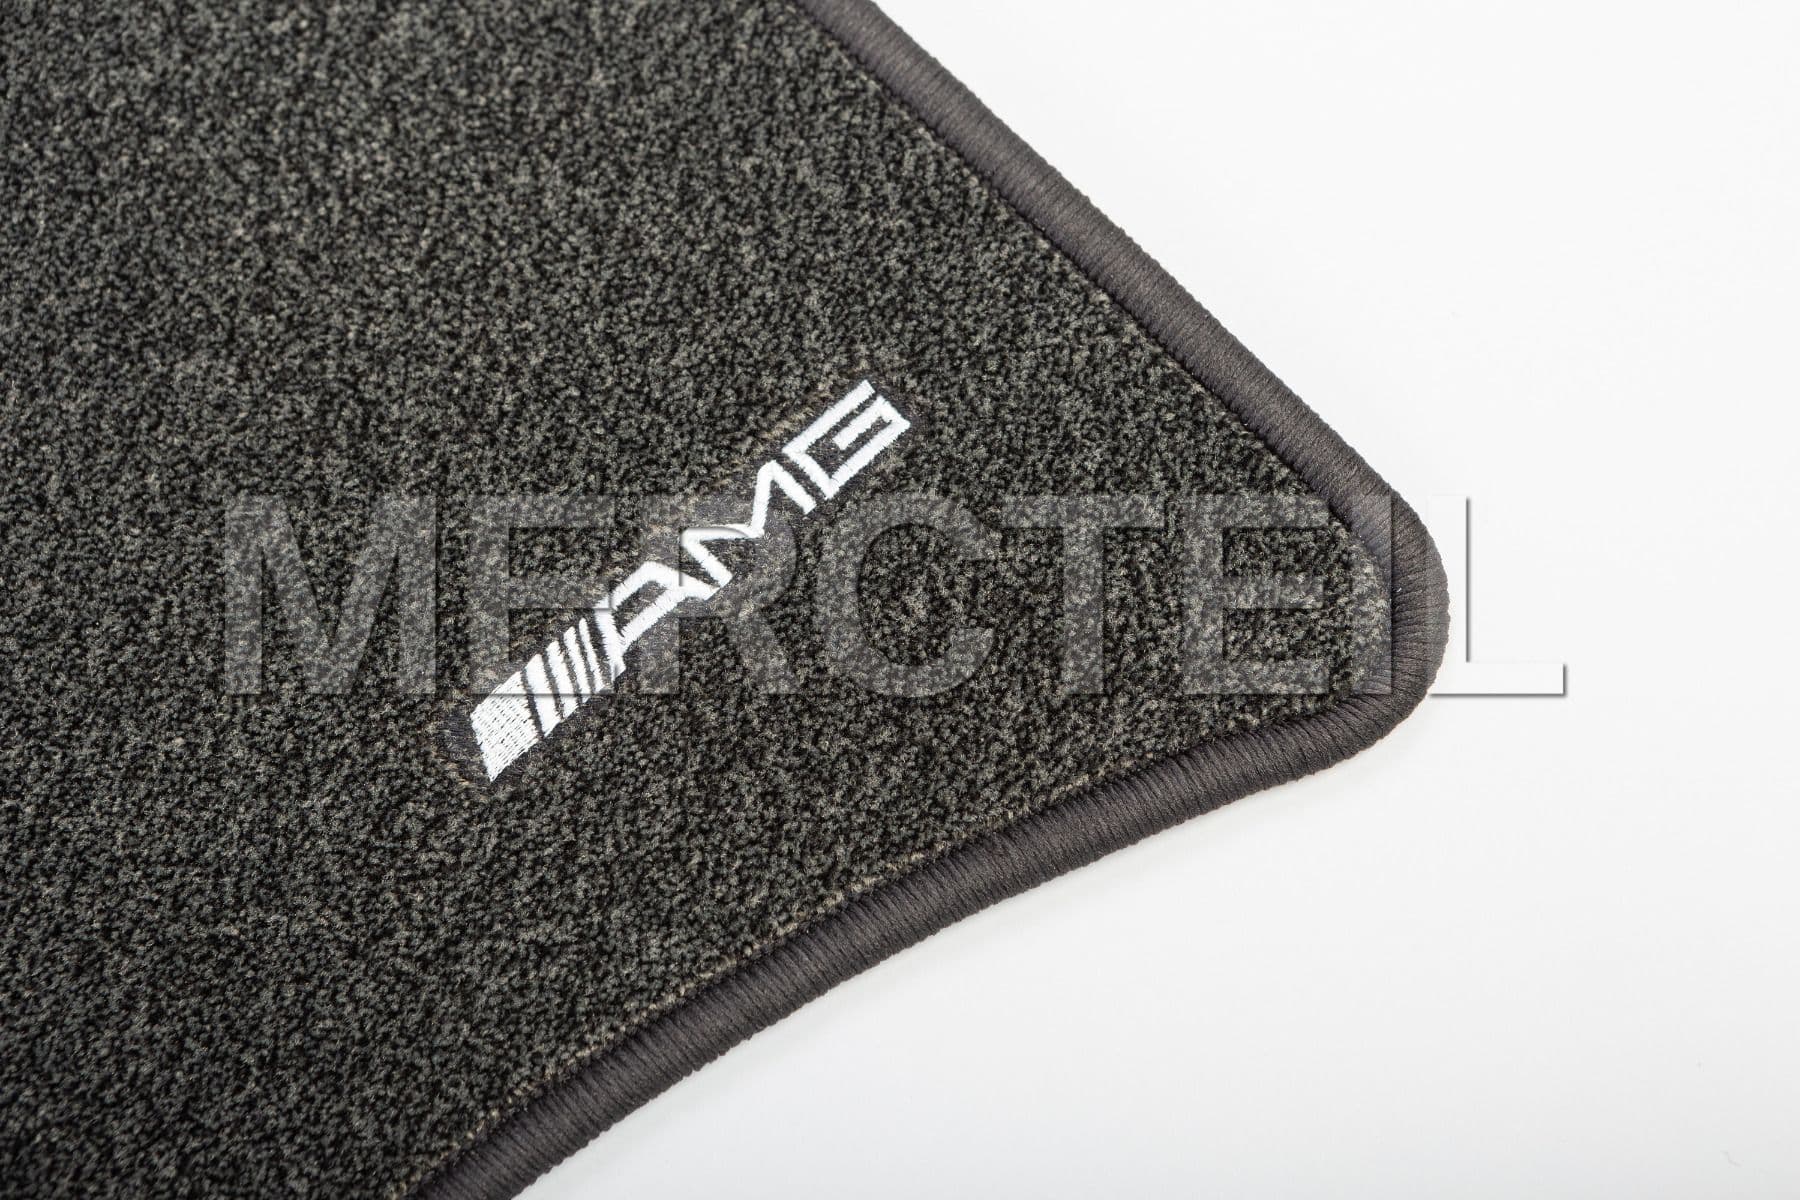 CLK Class AMG Velour Anthracite Floor Mats Genuine Mercedes AMG (part number: B66037018)